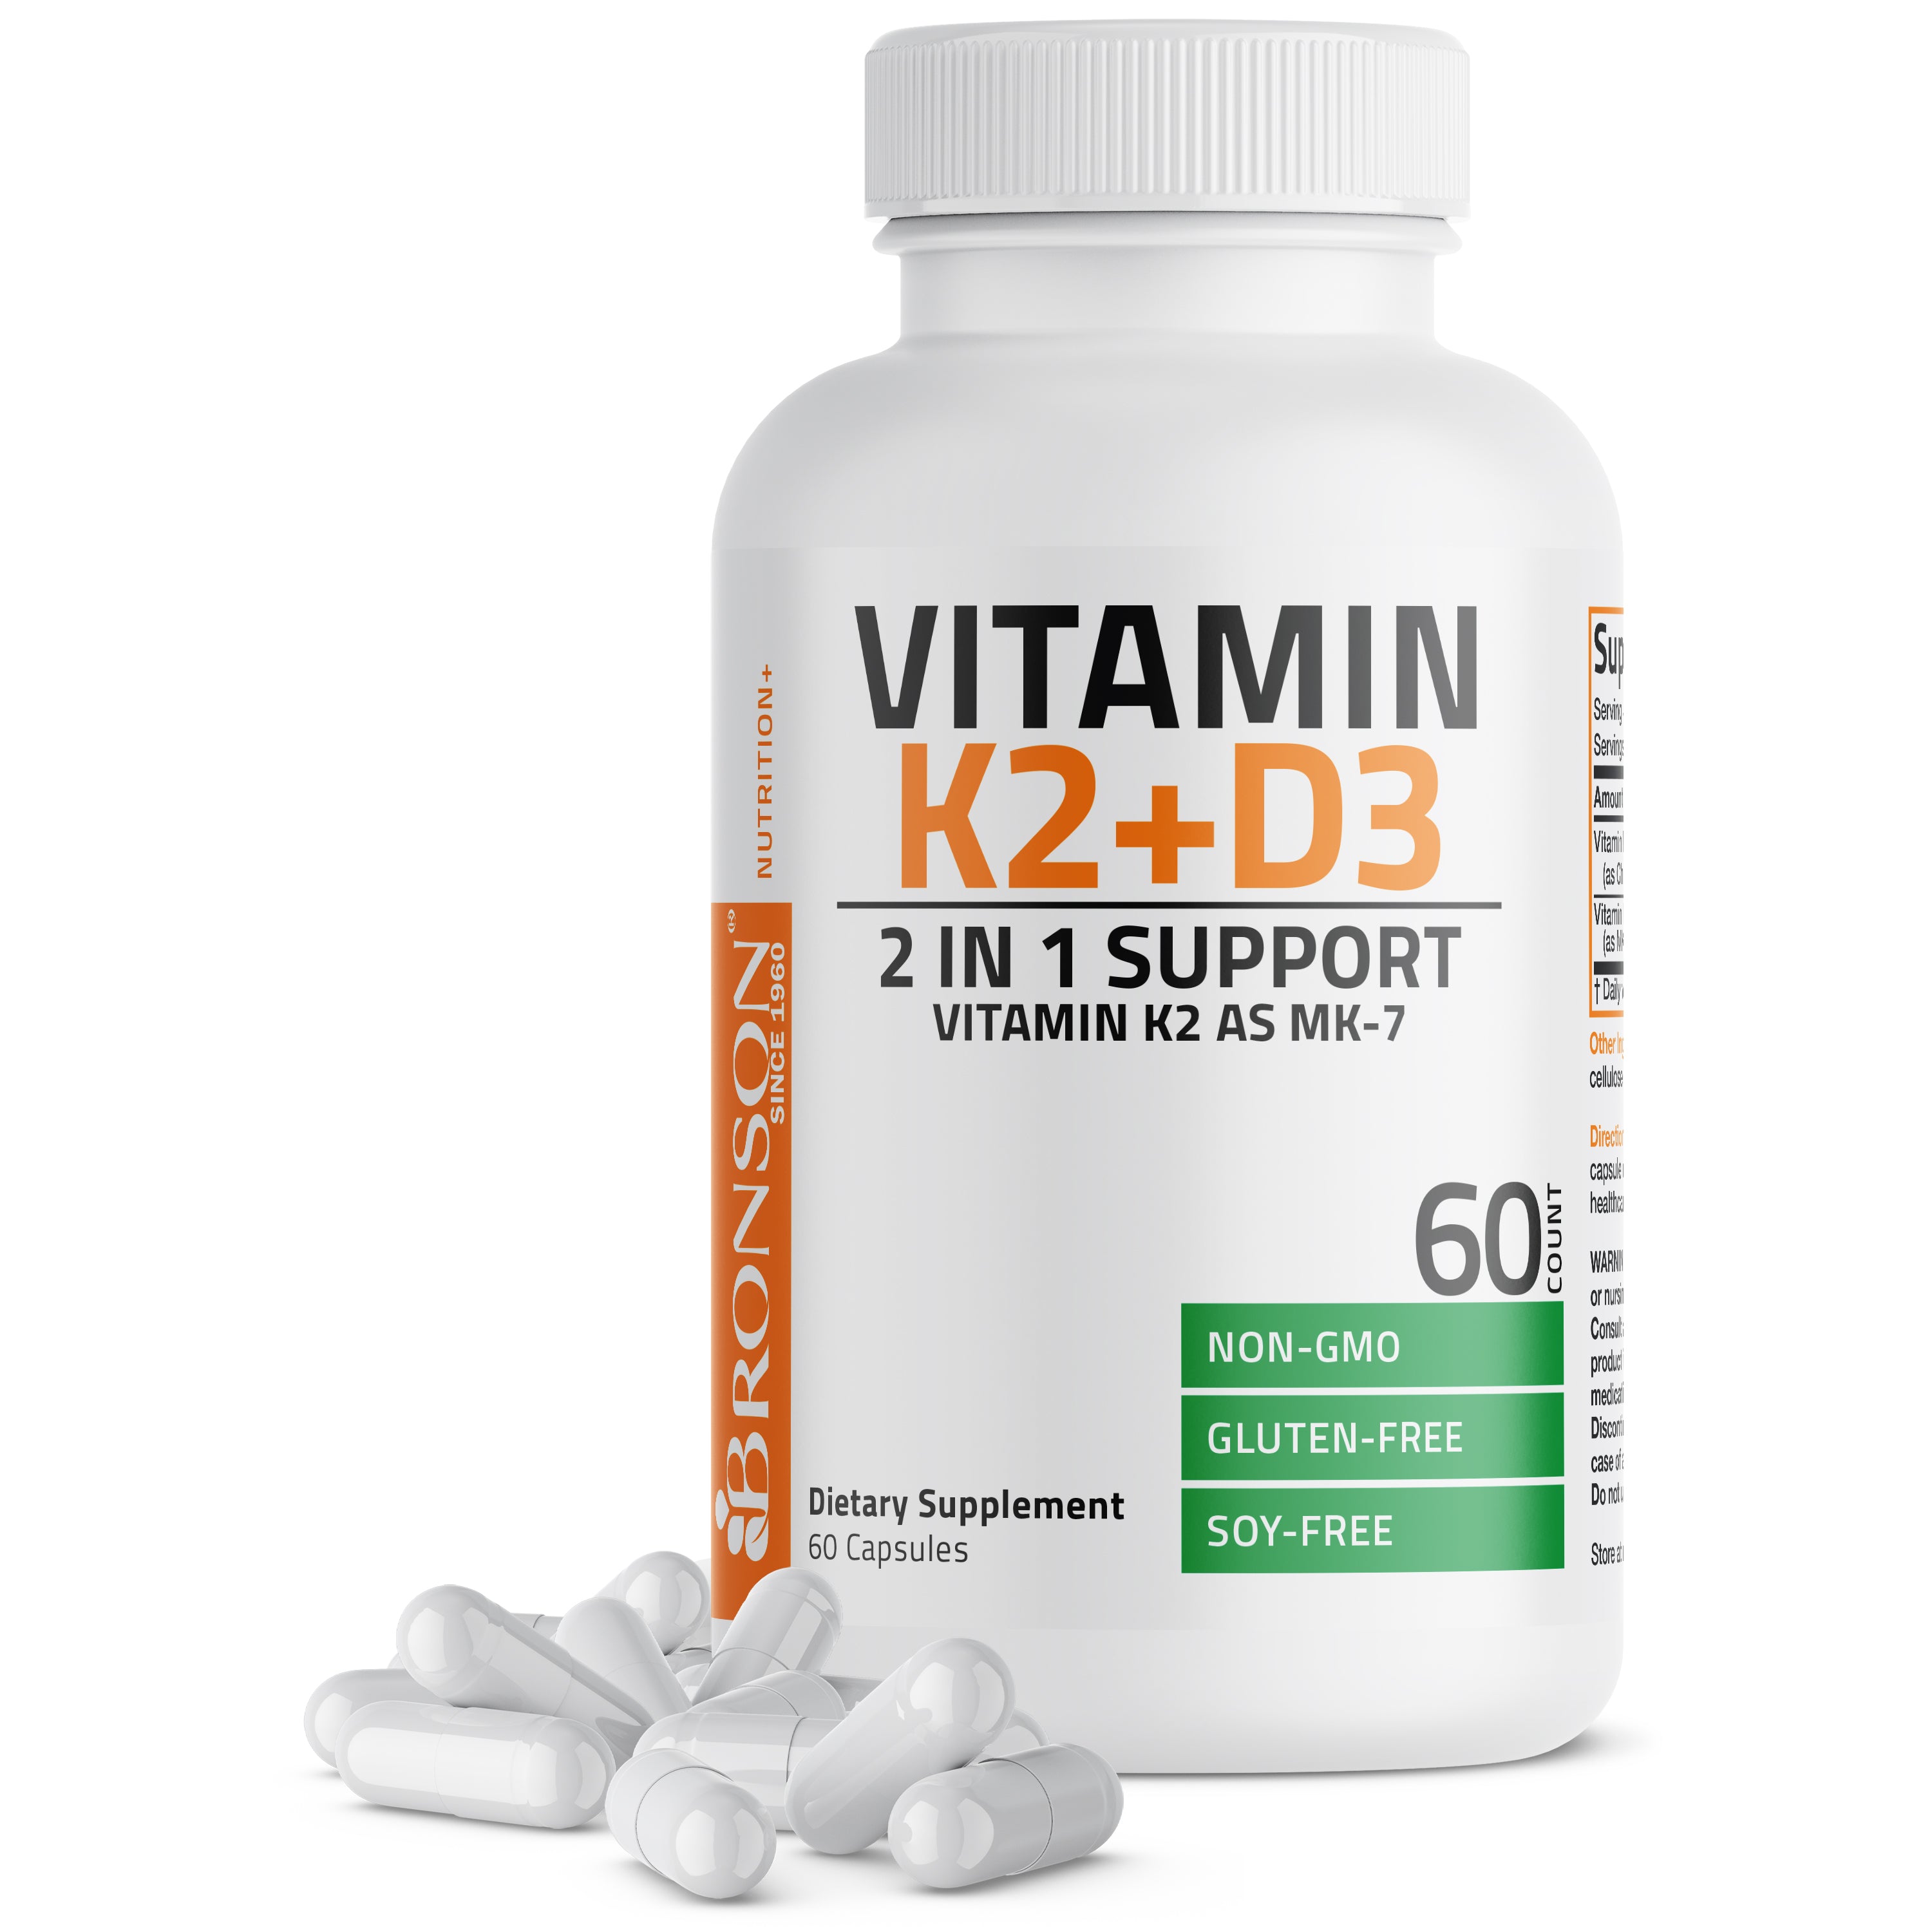 Vitamin K2 MK-7 Plus Vitamin D3 view 7 of 6